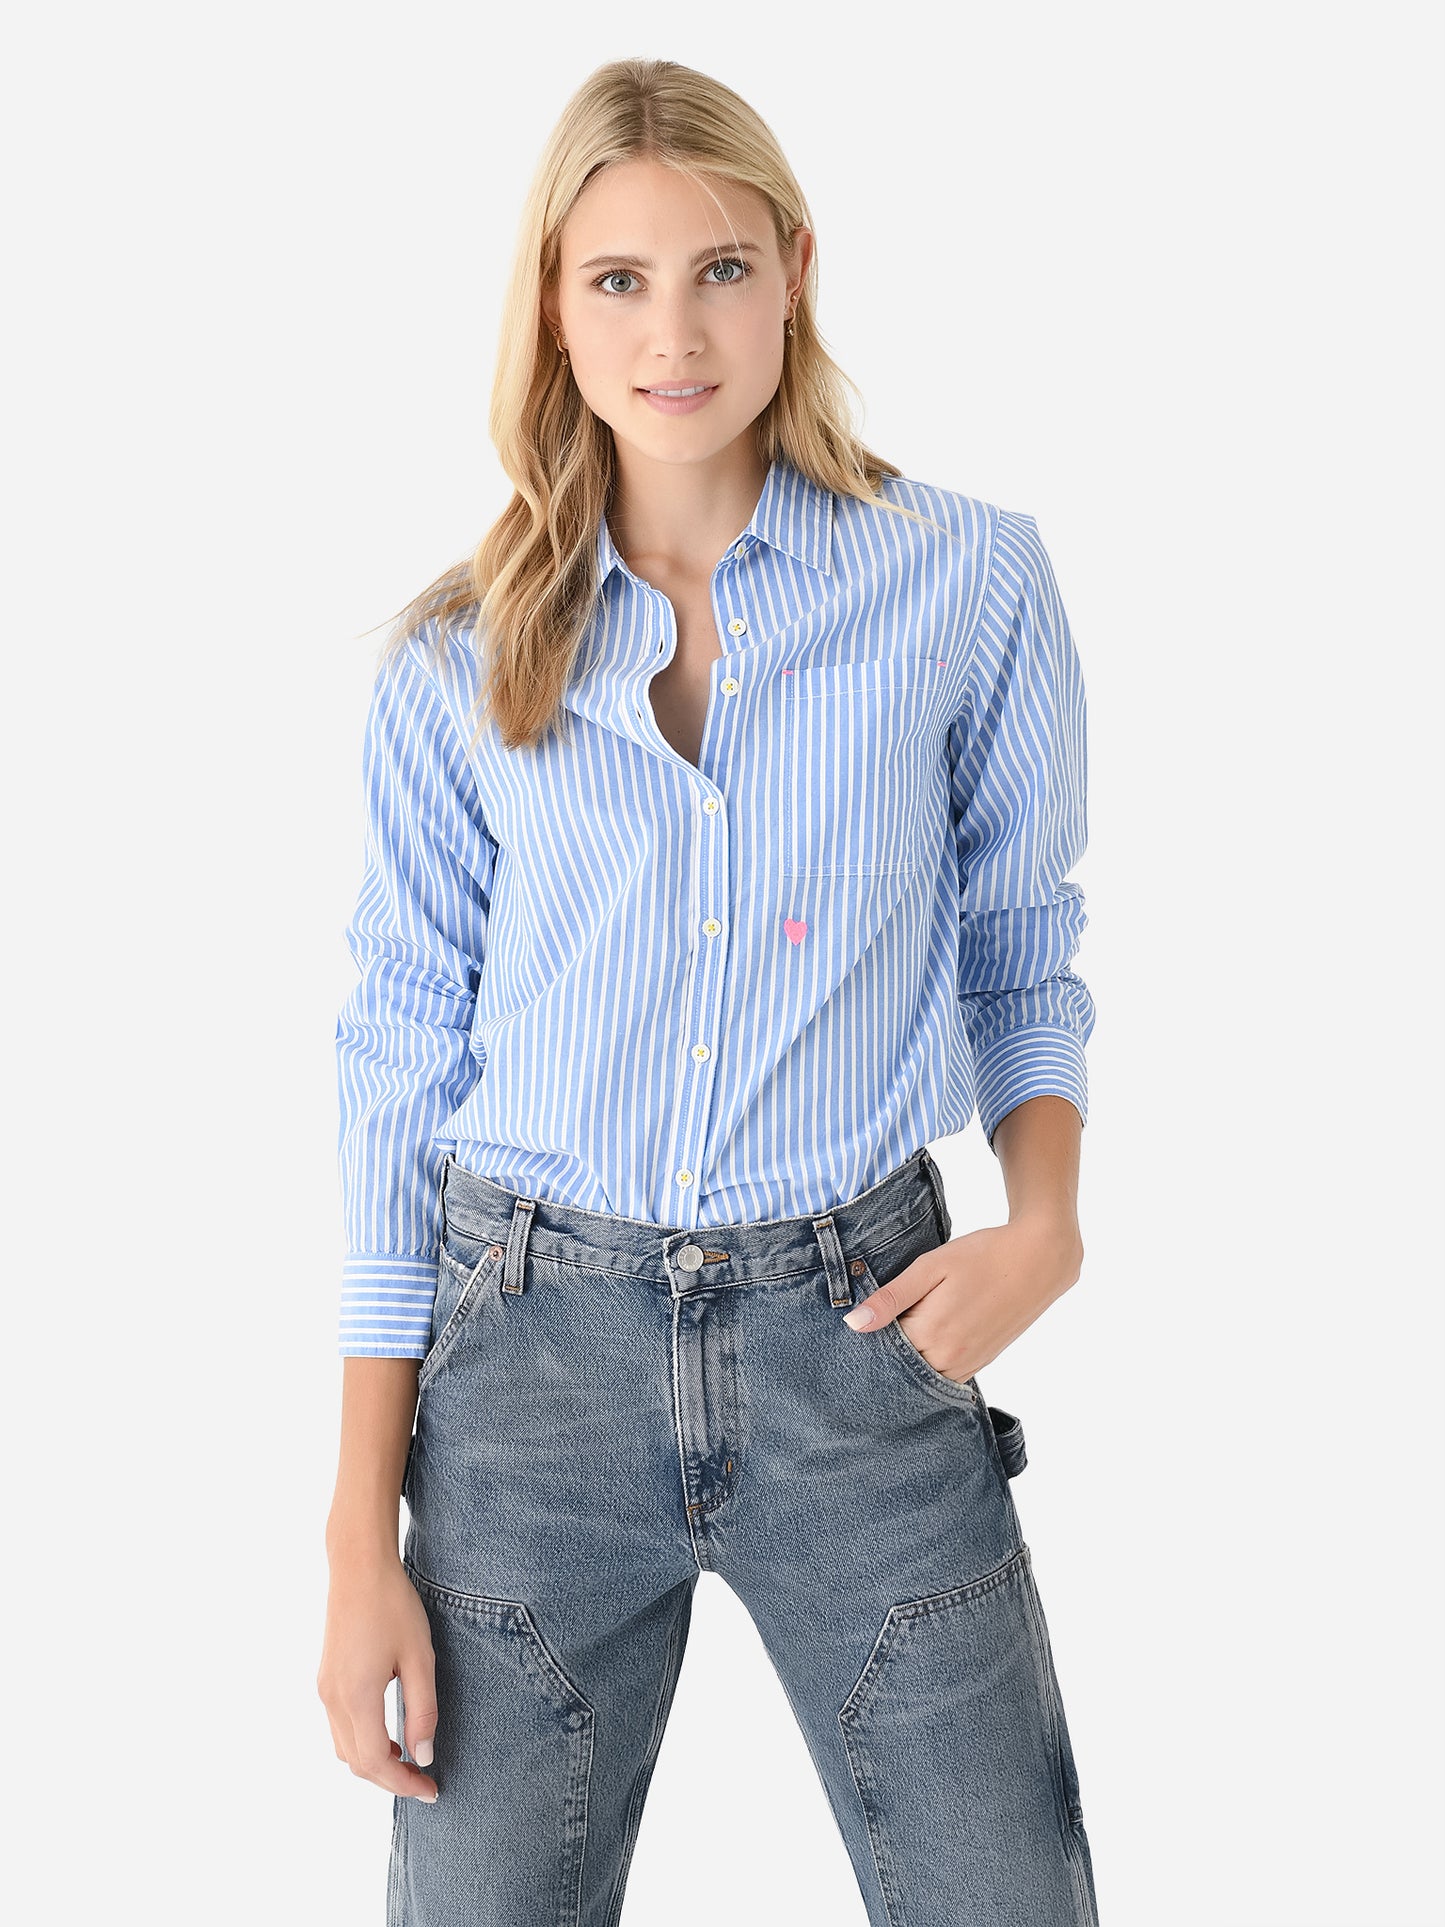 Kerri Rosenthal Women's Mia Stripe Shirt